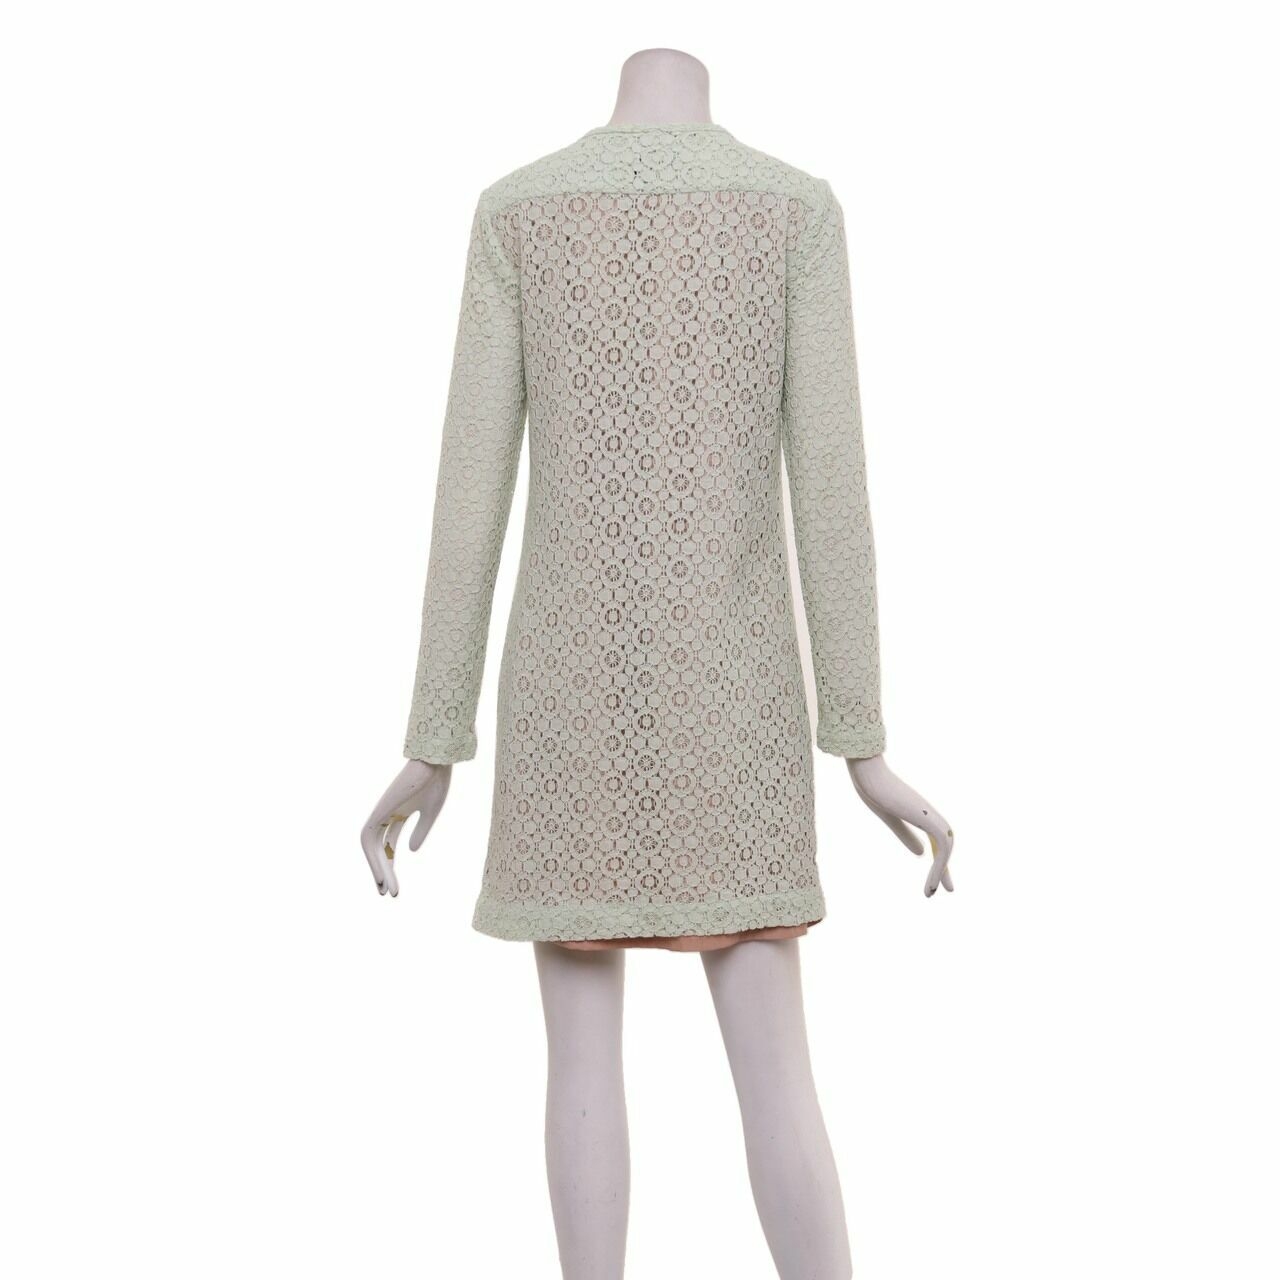 Victoria Beckham For Target Soft Mint Mini Dress